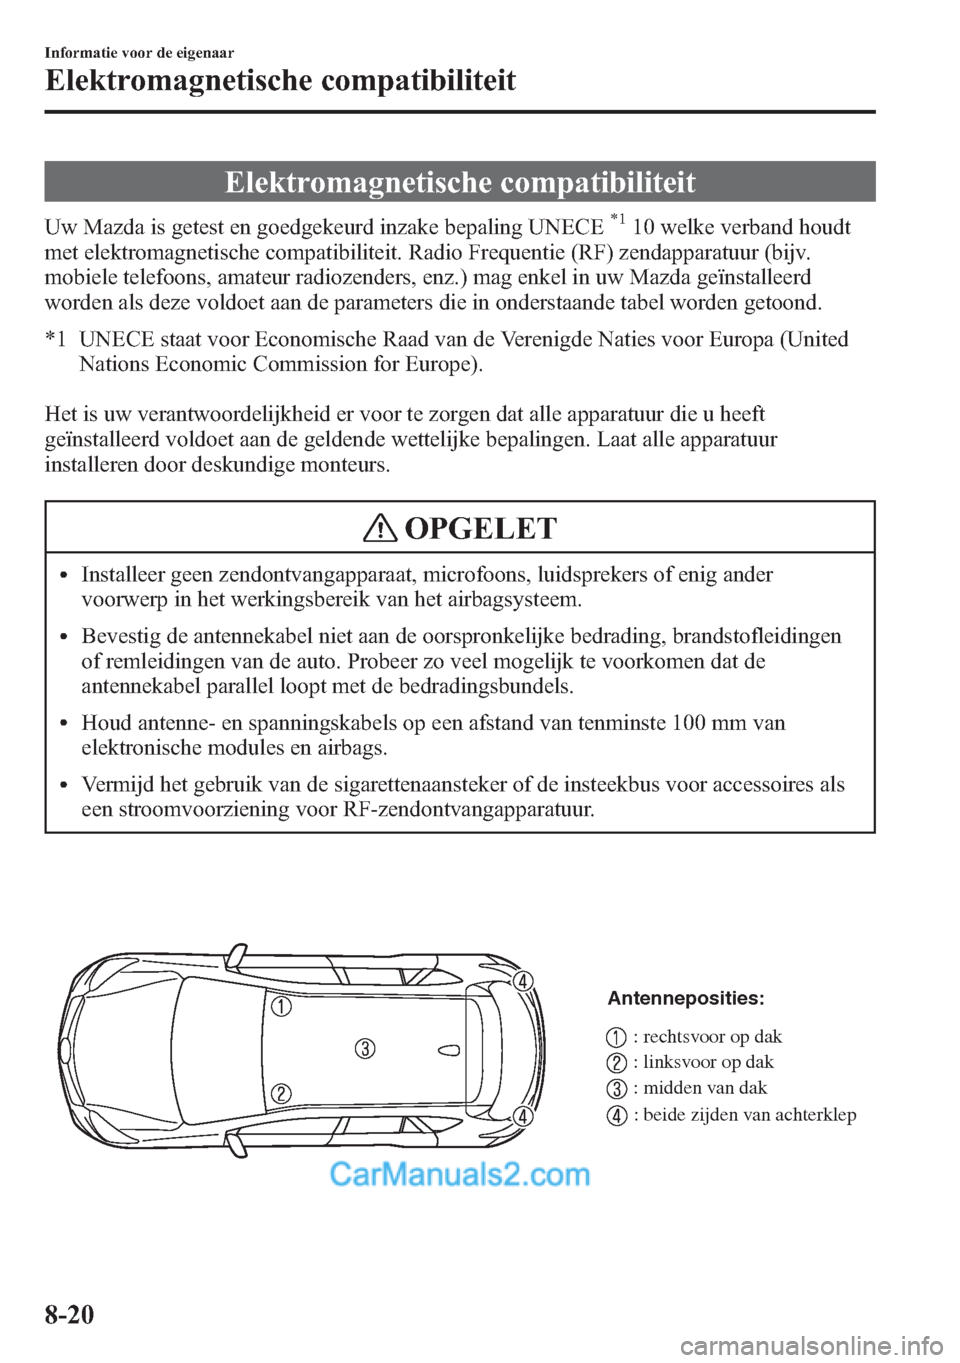 MAZDA MODEL CX-5 2015  Handleiding (in Dutch) Elektromagnetische compatibiliteit
Uw Mazda is getest en goedgekeurd inzake bepaling UNECE*110 welke verband houdt
met elektromagnetische compatibiliteit. Radio Frequentie (RF) zendapparatuur (bijv.
m